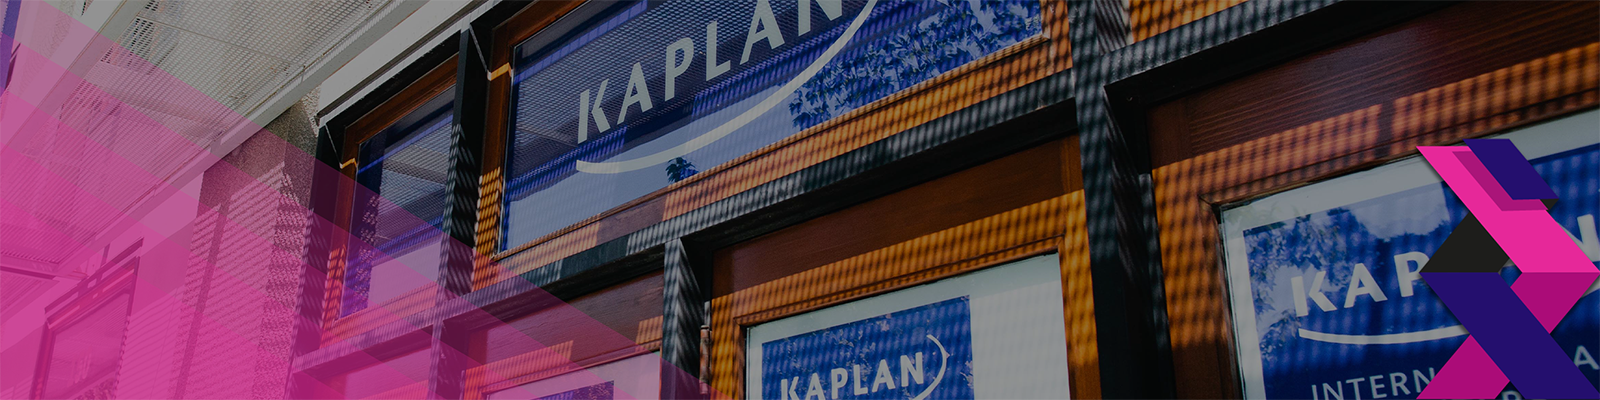 Kaplan International Languages - Torquay görseli